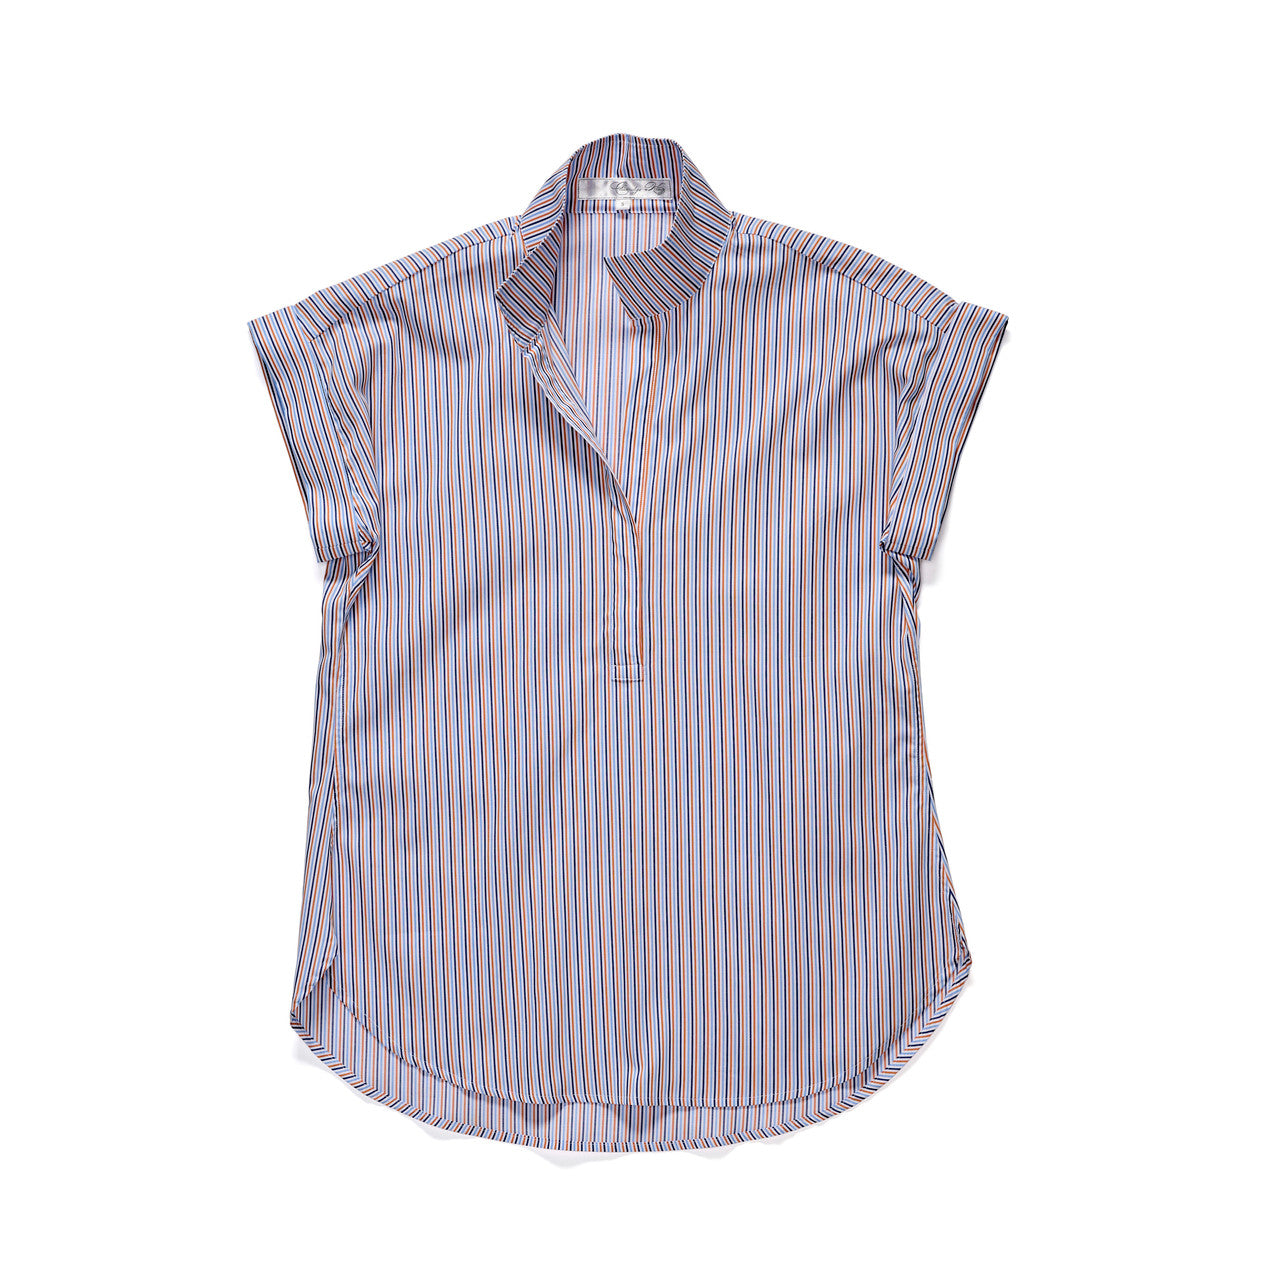 Claridge & King Short Sleeve Top - (two colors)